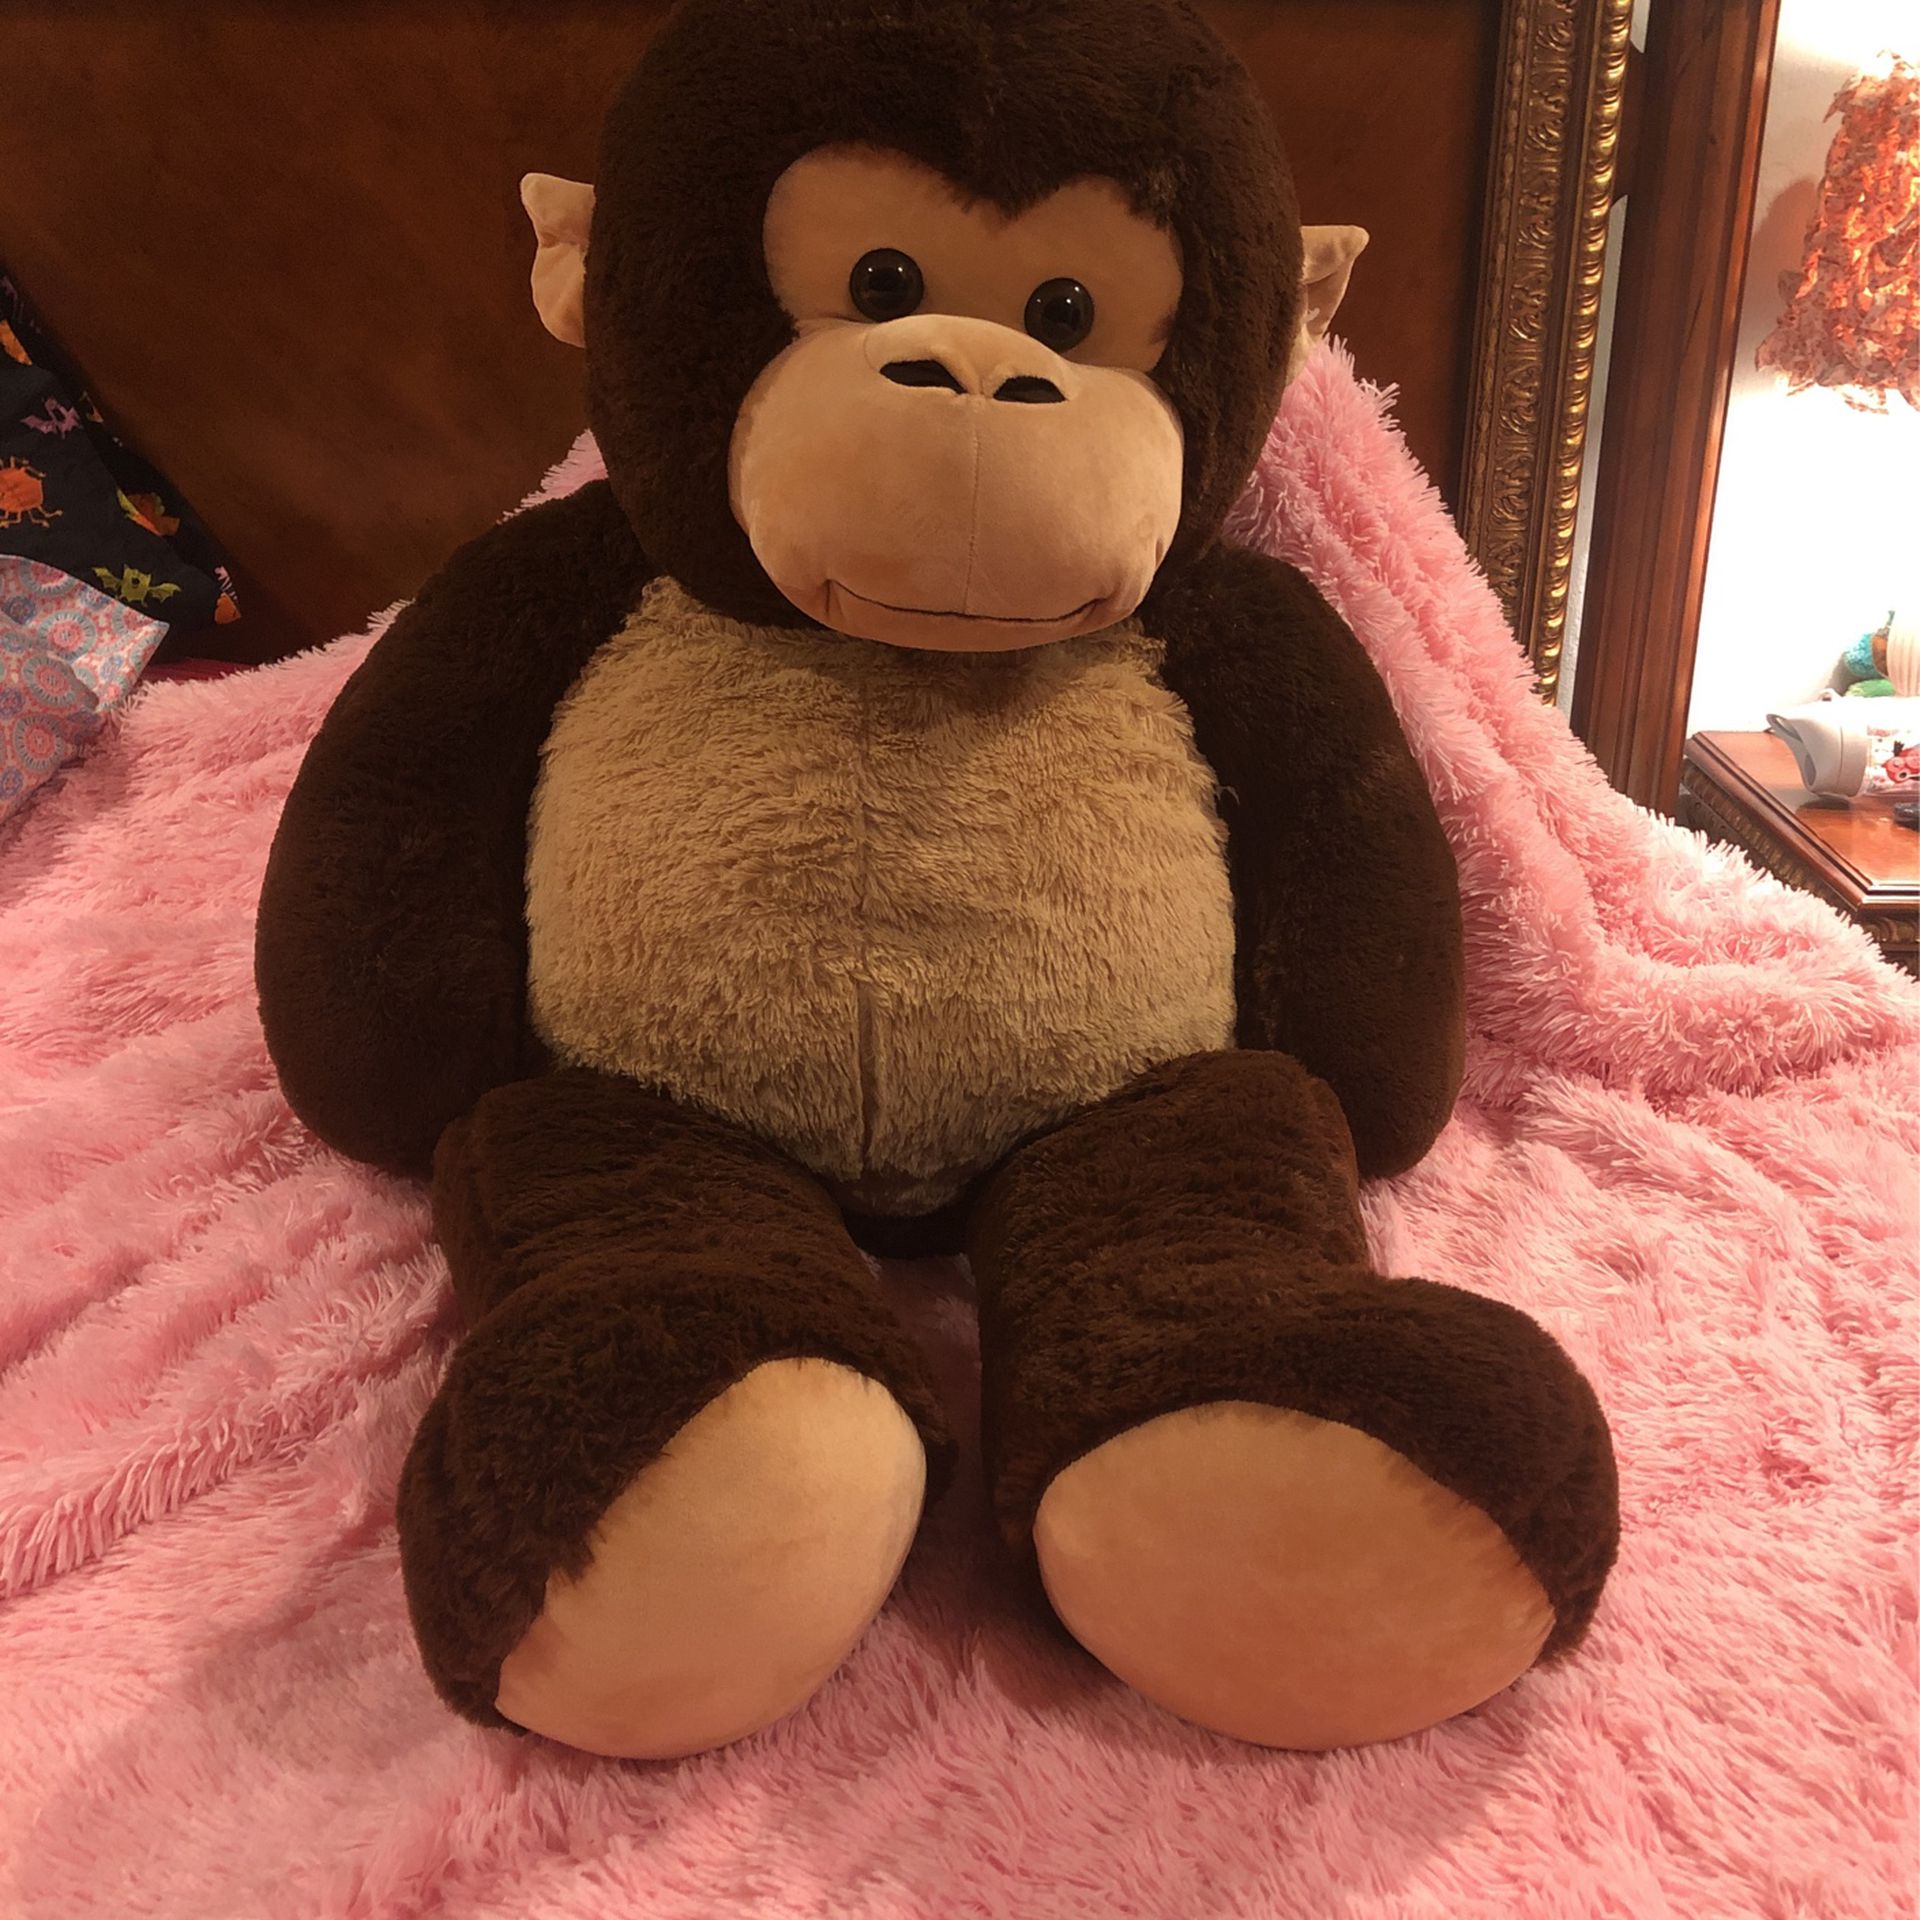 Big Stuffed Monkey! 